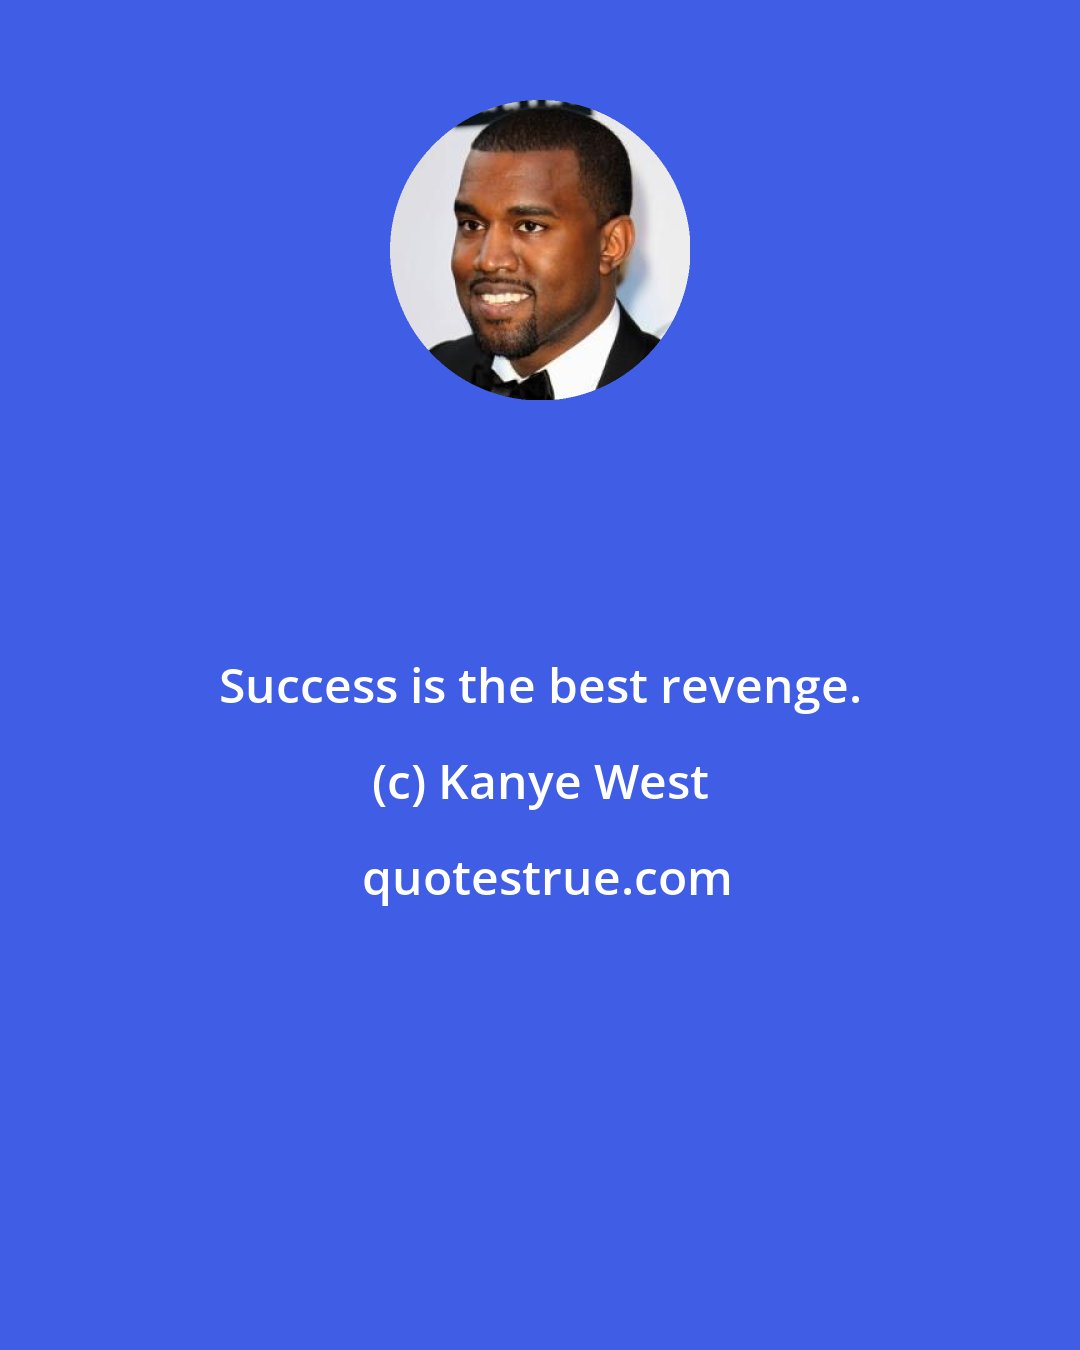 Kanye West: Success is the best revenge.